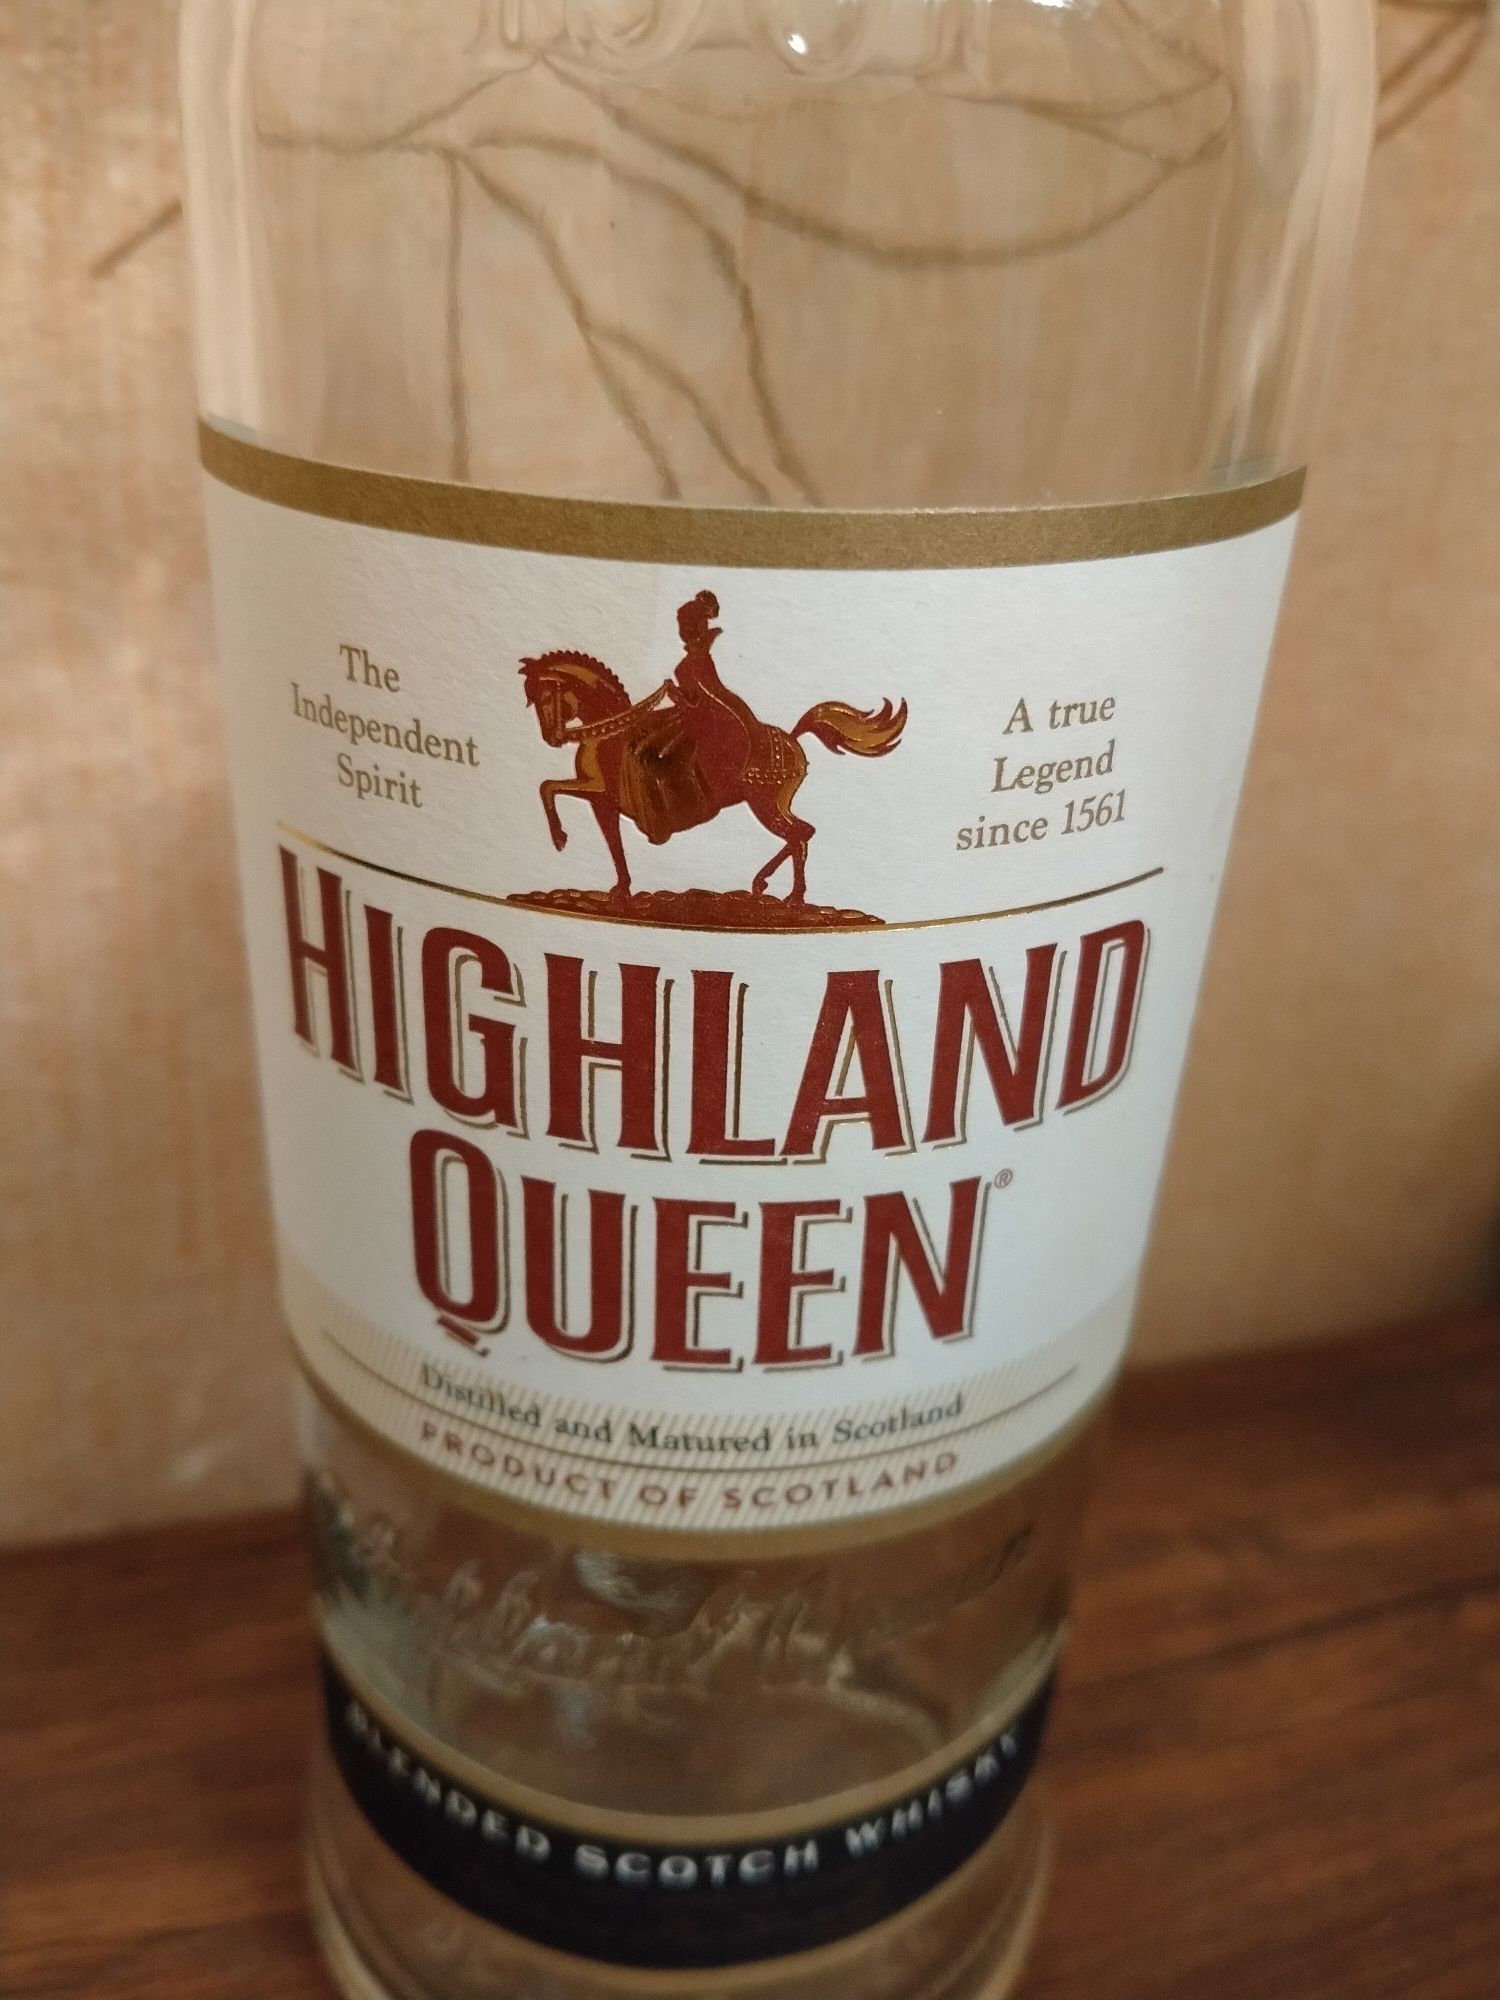 Пустая бутылка из под виски бленд" Higtland Gueen"